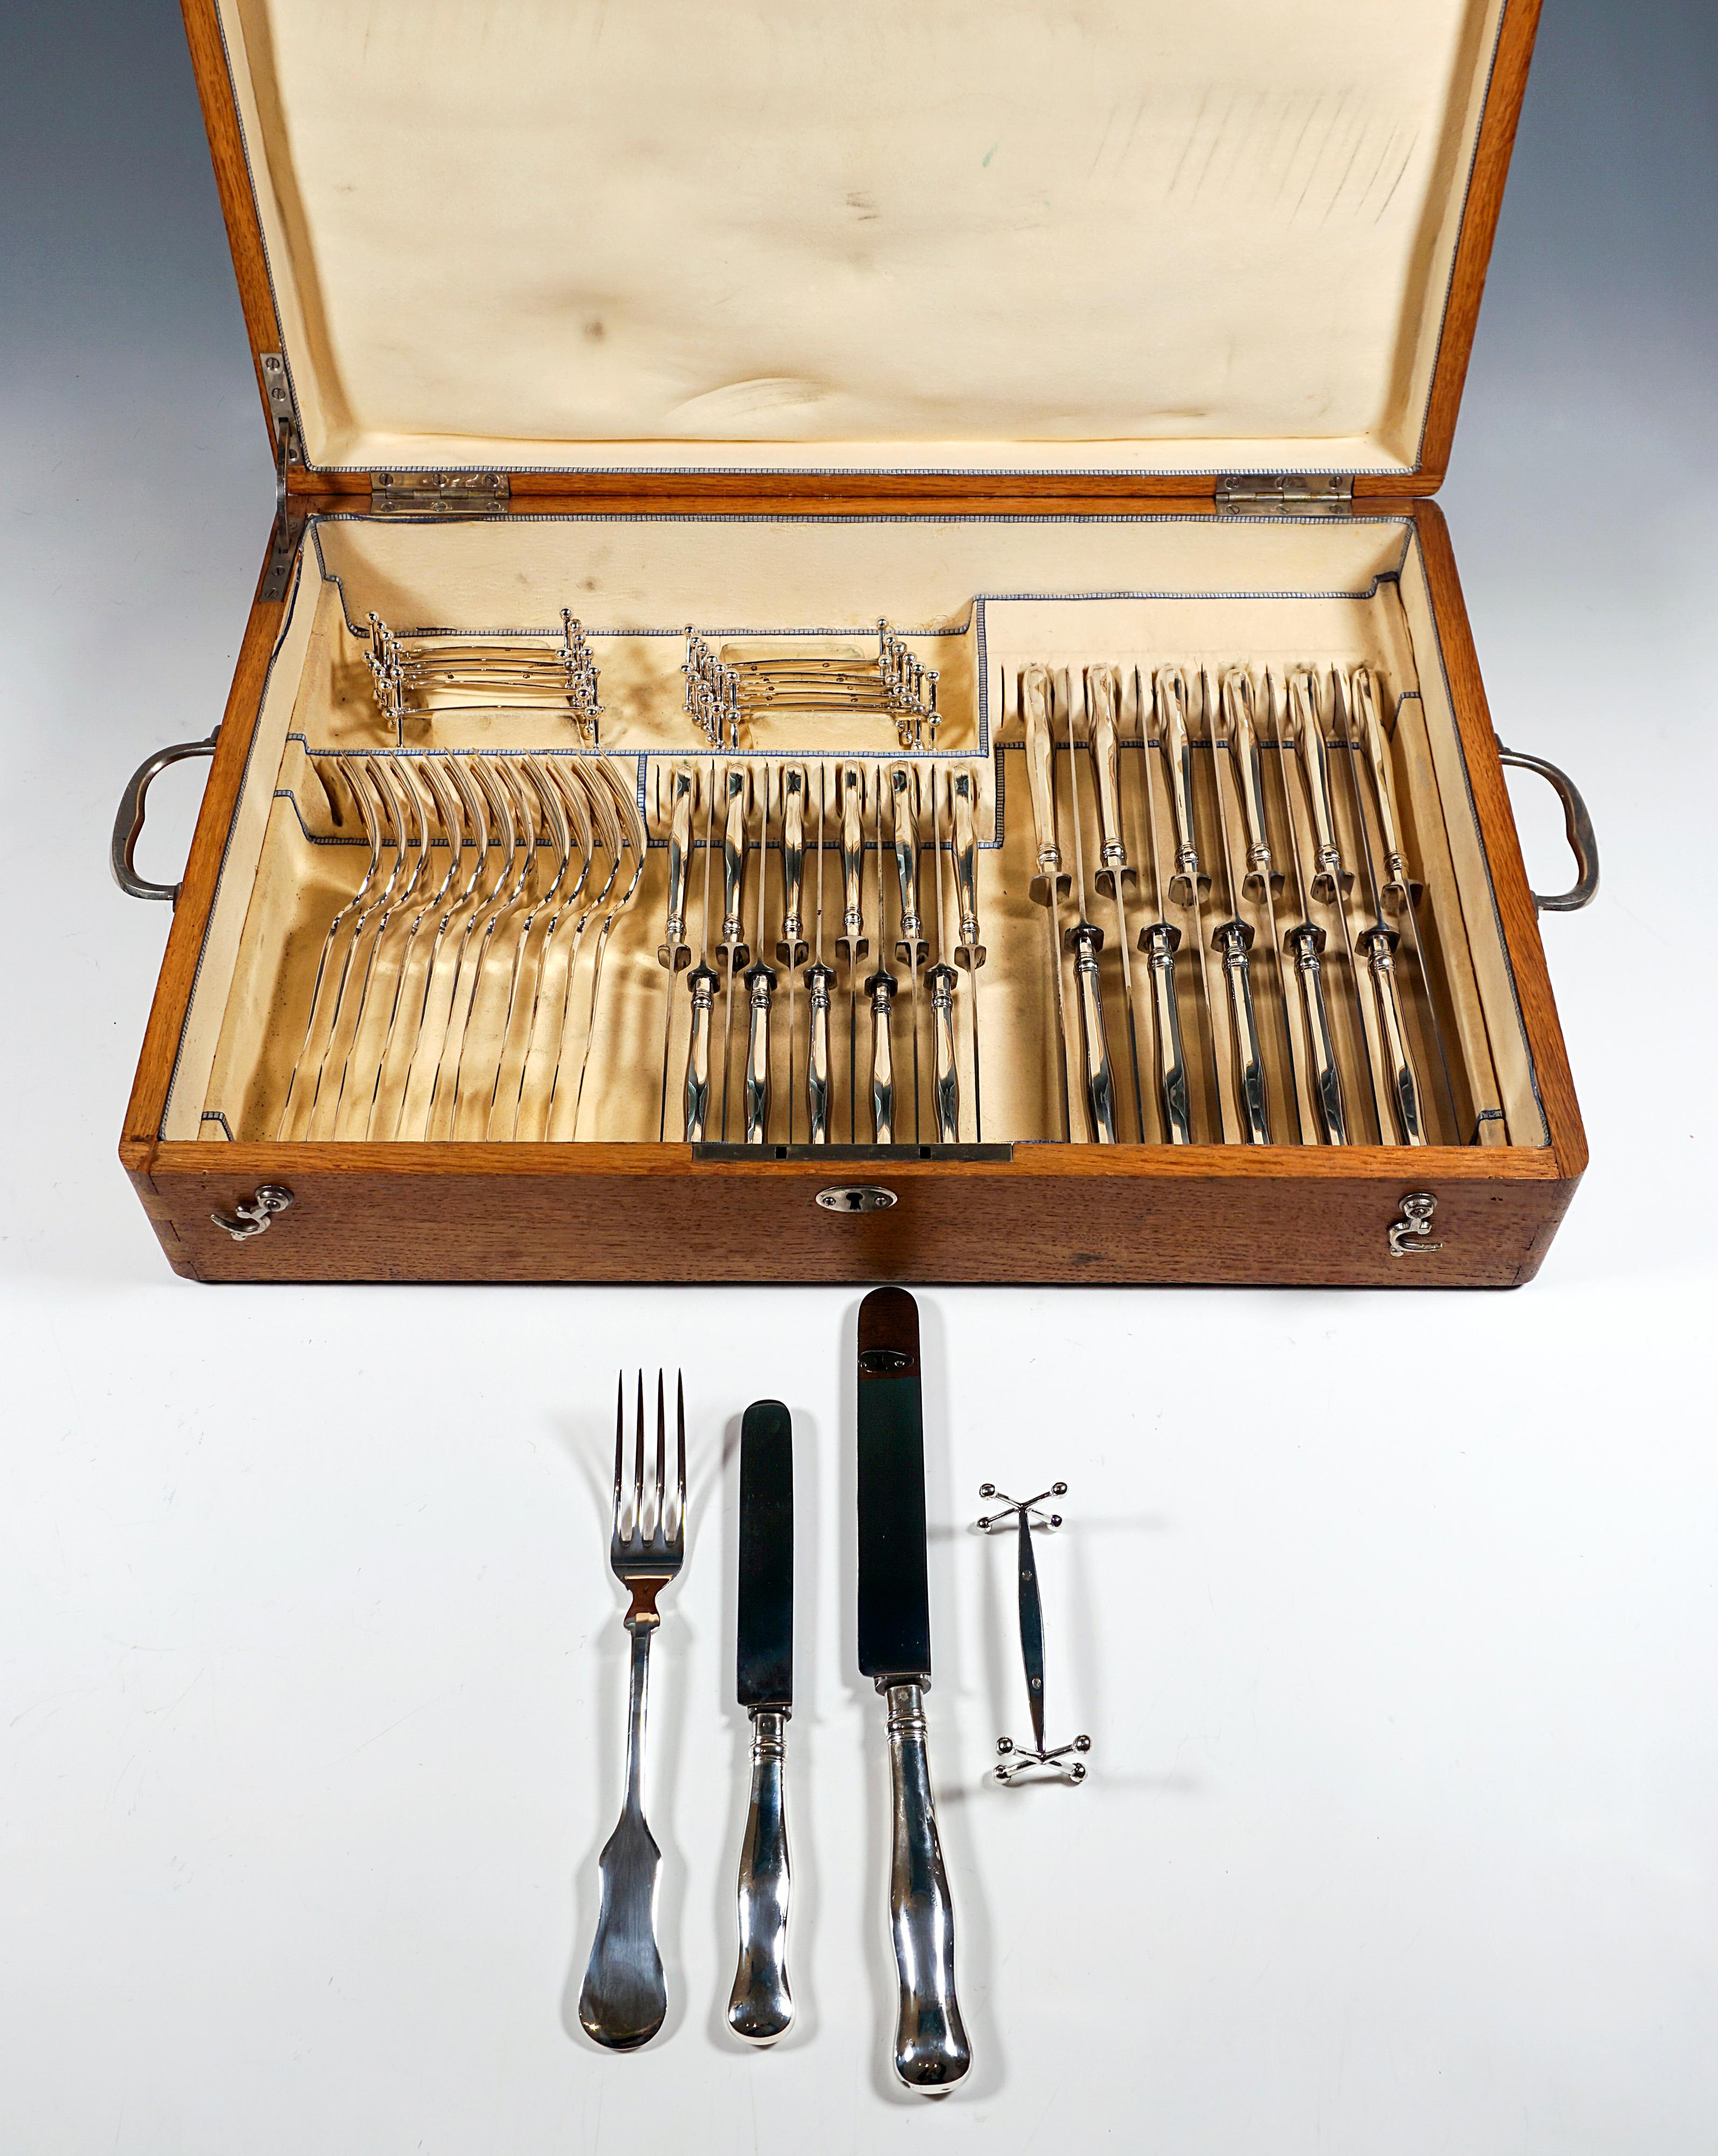 Viennese Silver Art Nouveau Cutlery Set, 12 People by Klinkosch In Original Case For Sale 1